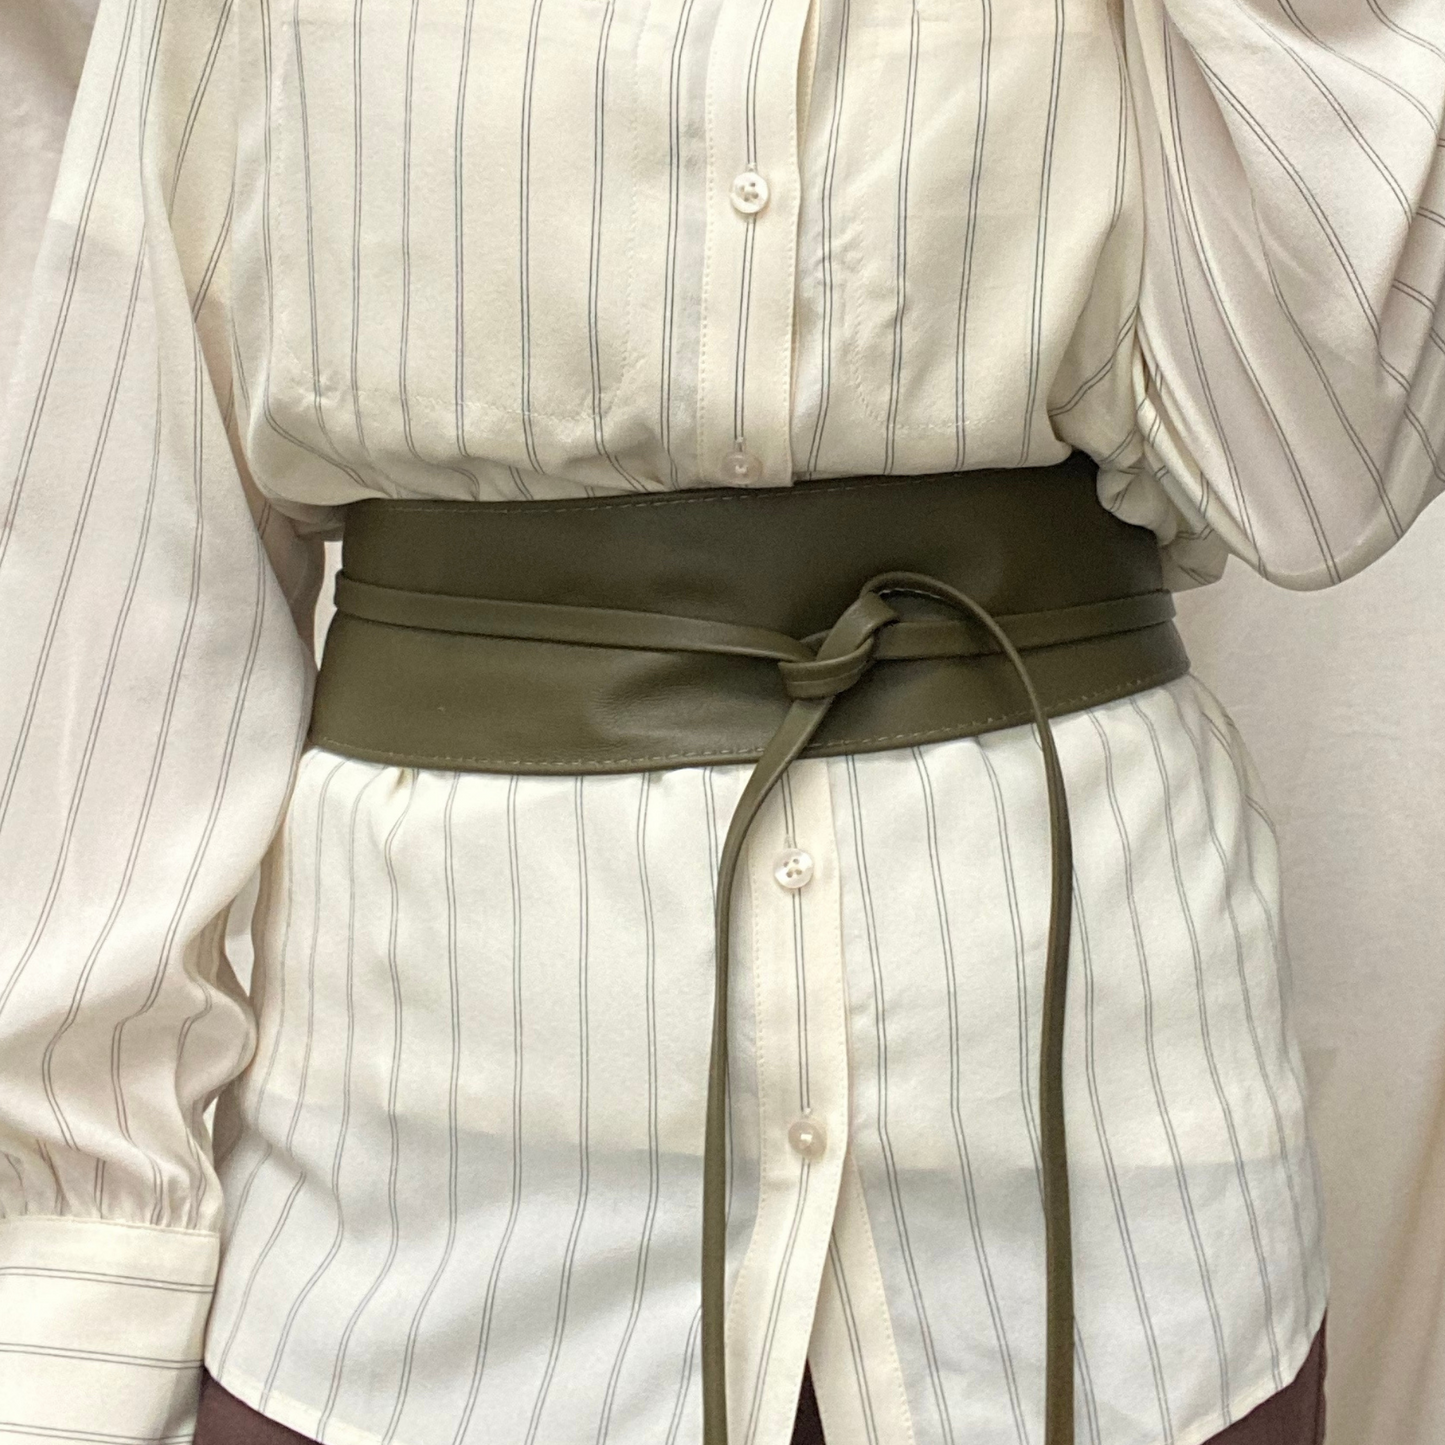 The Obi Leather Wrap Belt